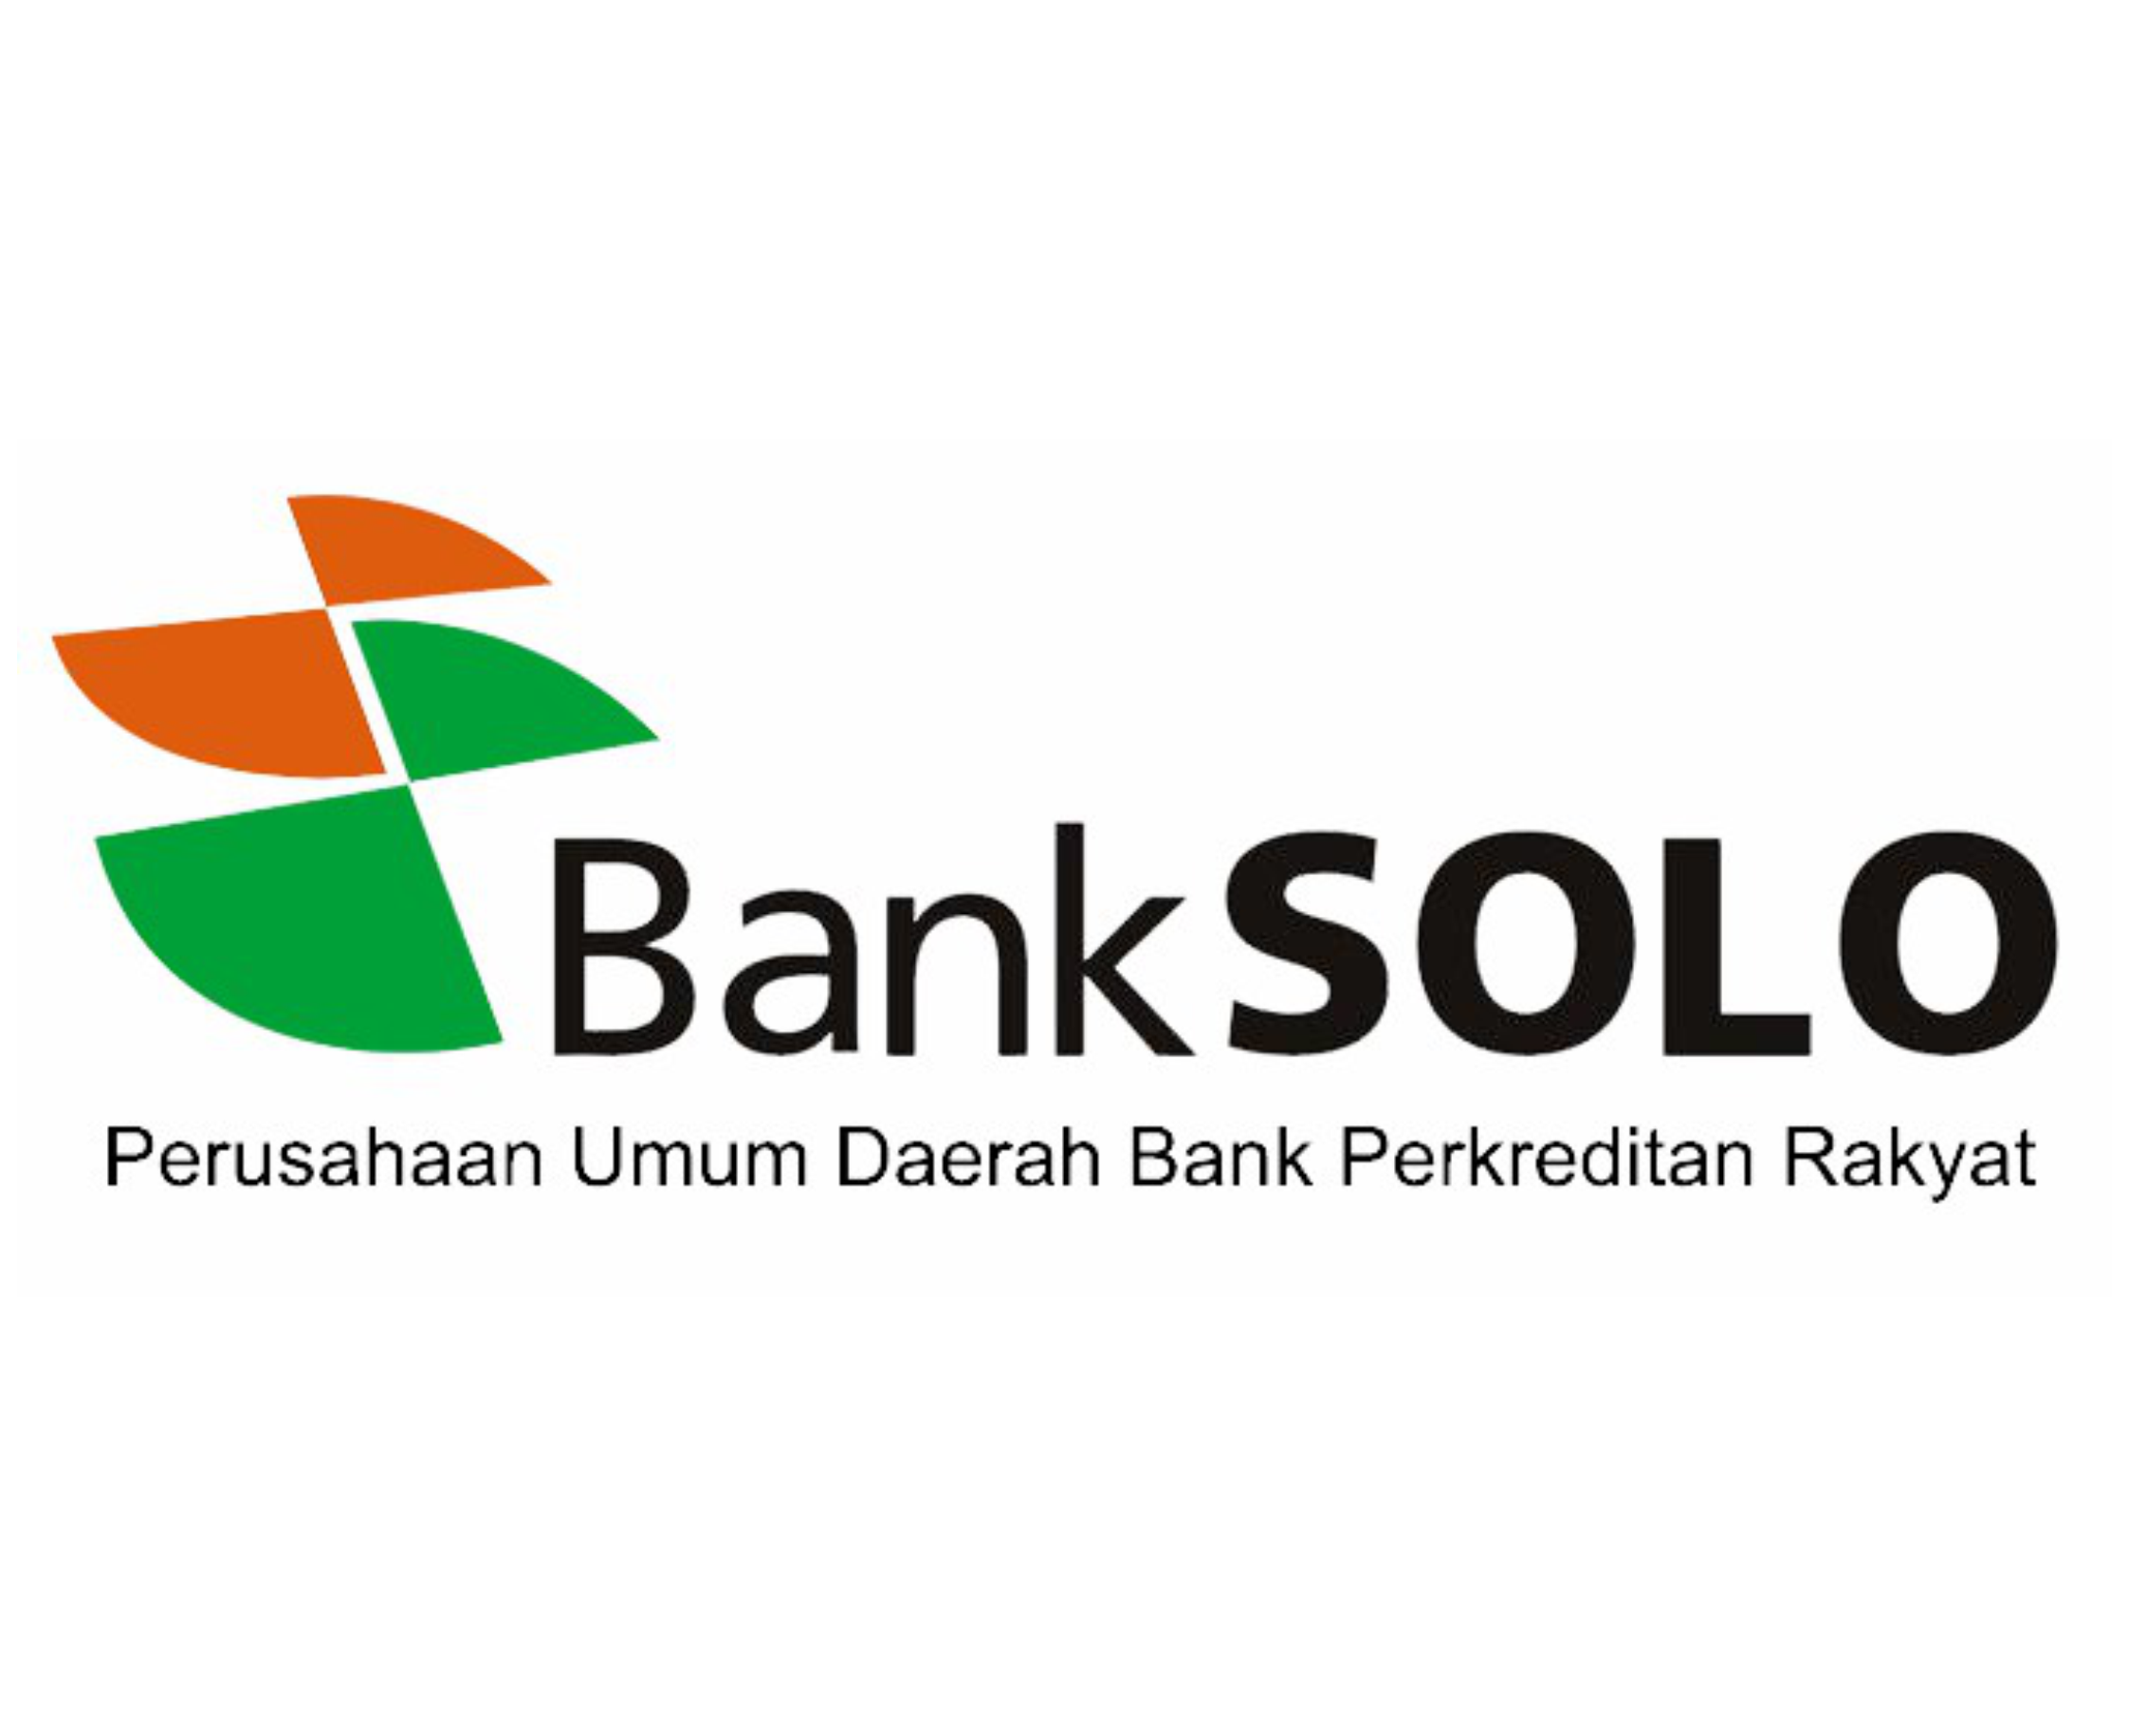 Bank Solo